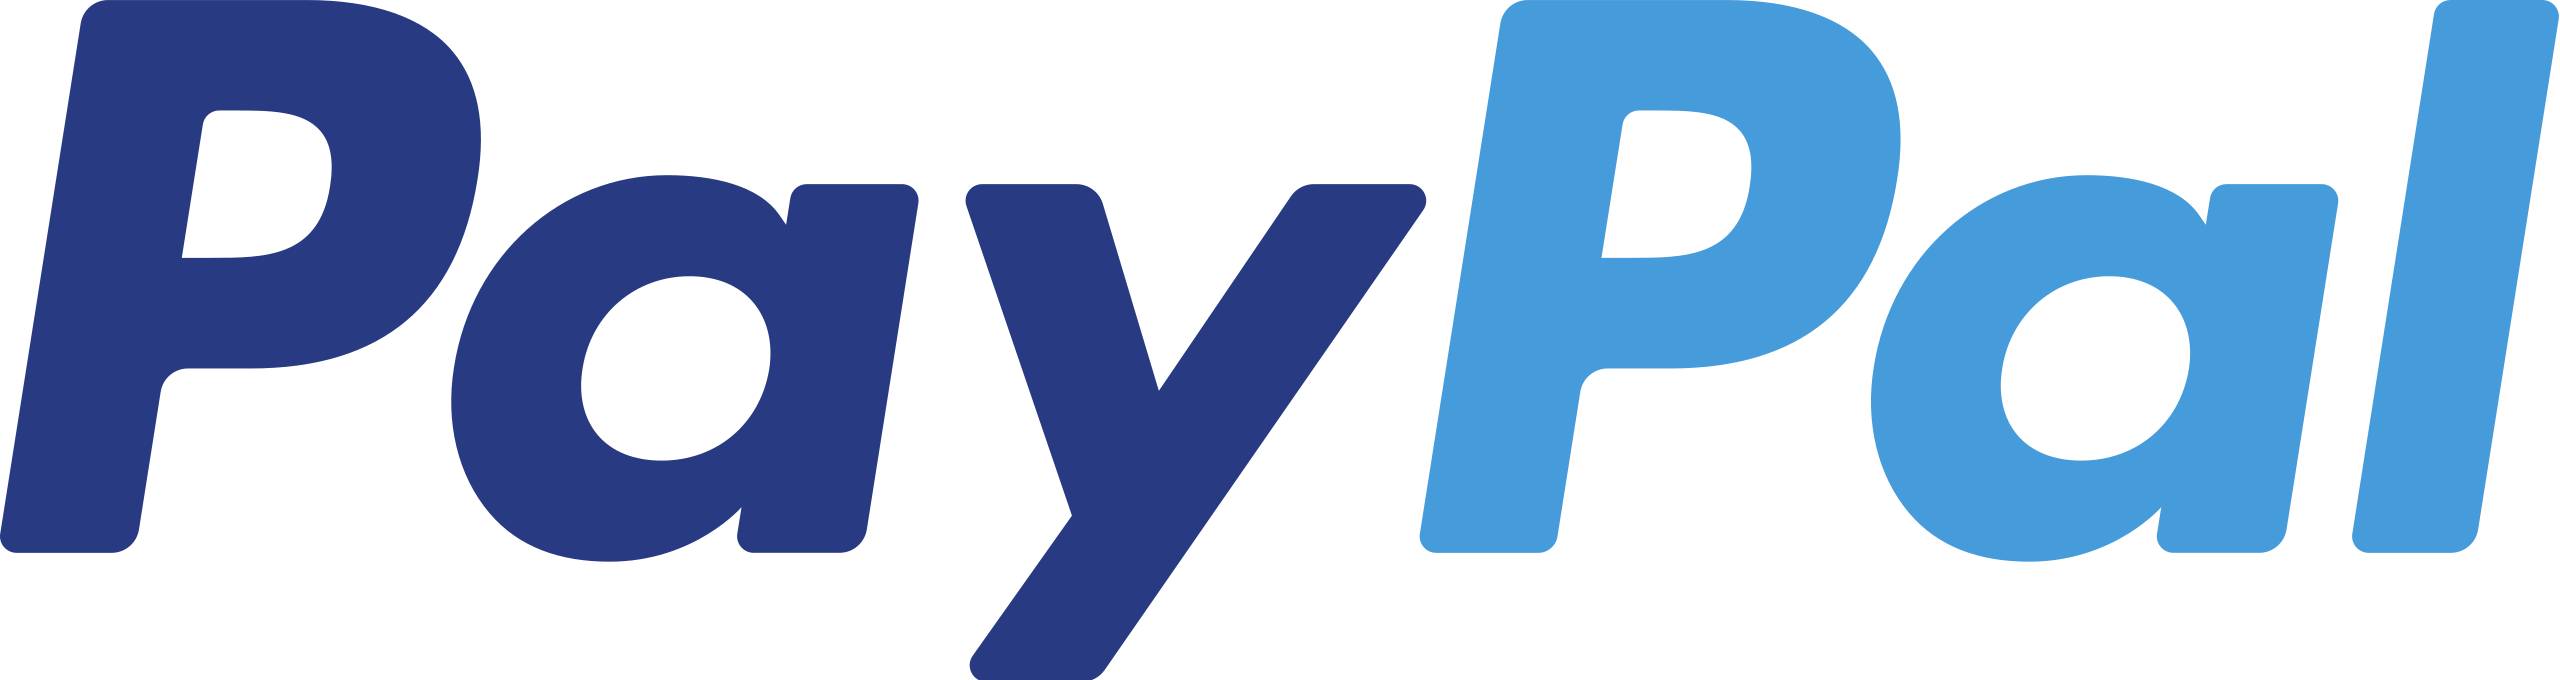 2560px paypal logo.svg